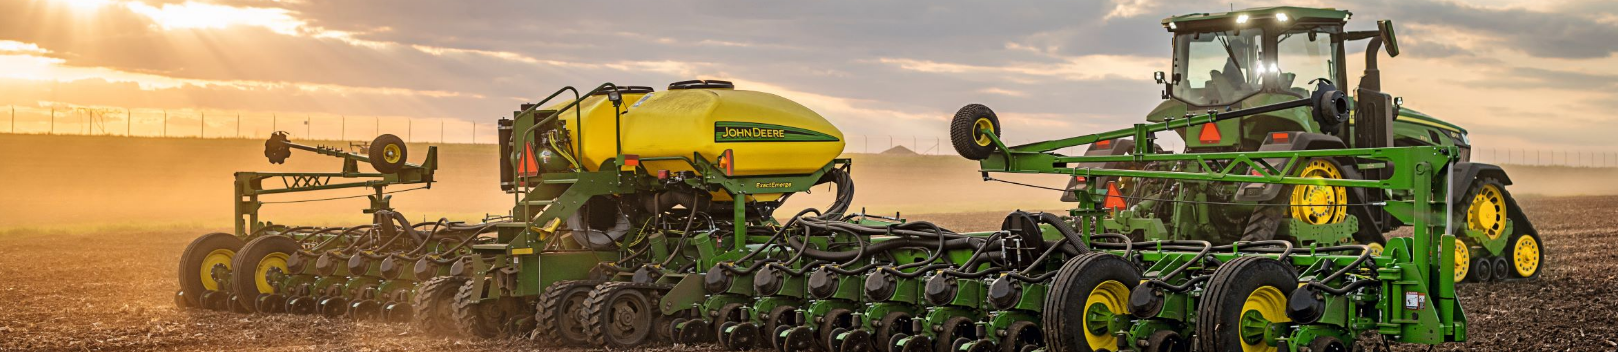 John Deere agricultural equipment